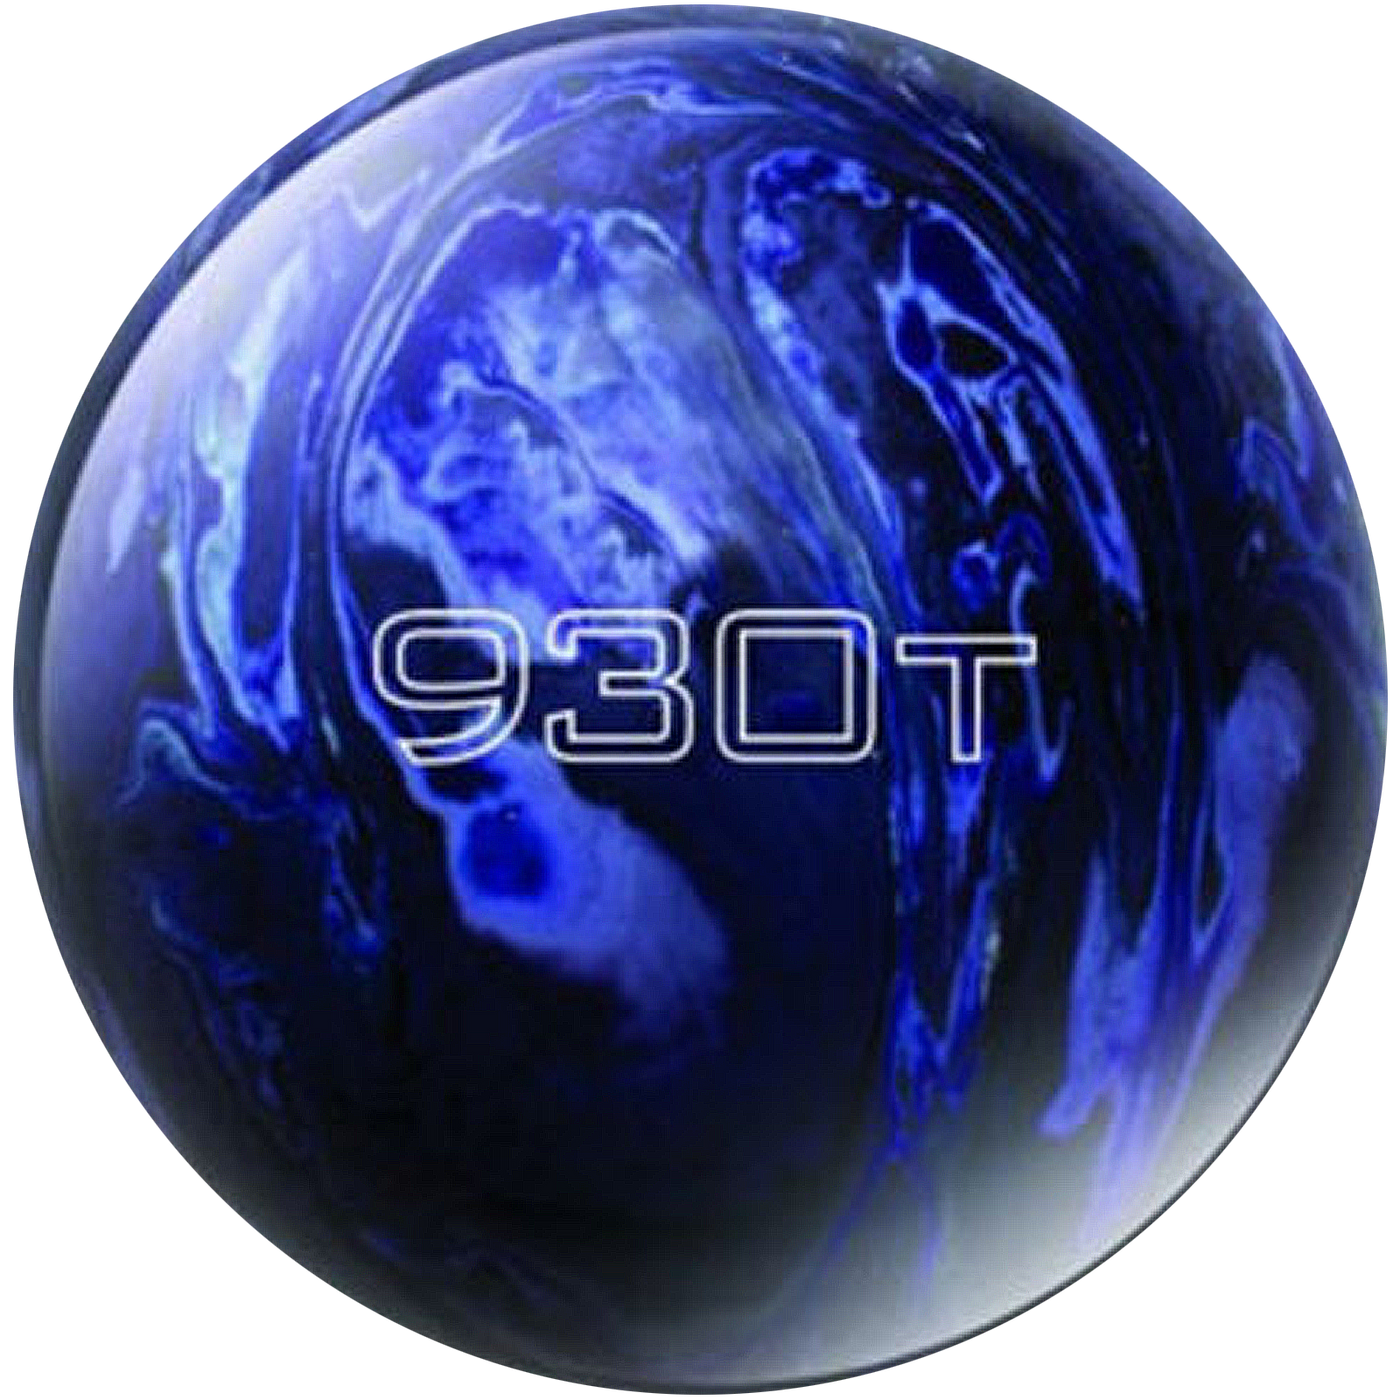 930T Bowling Ball